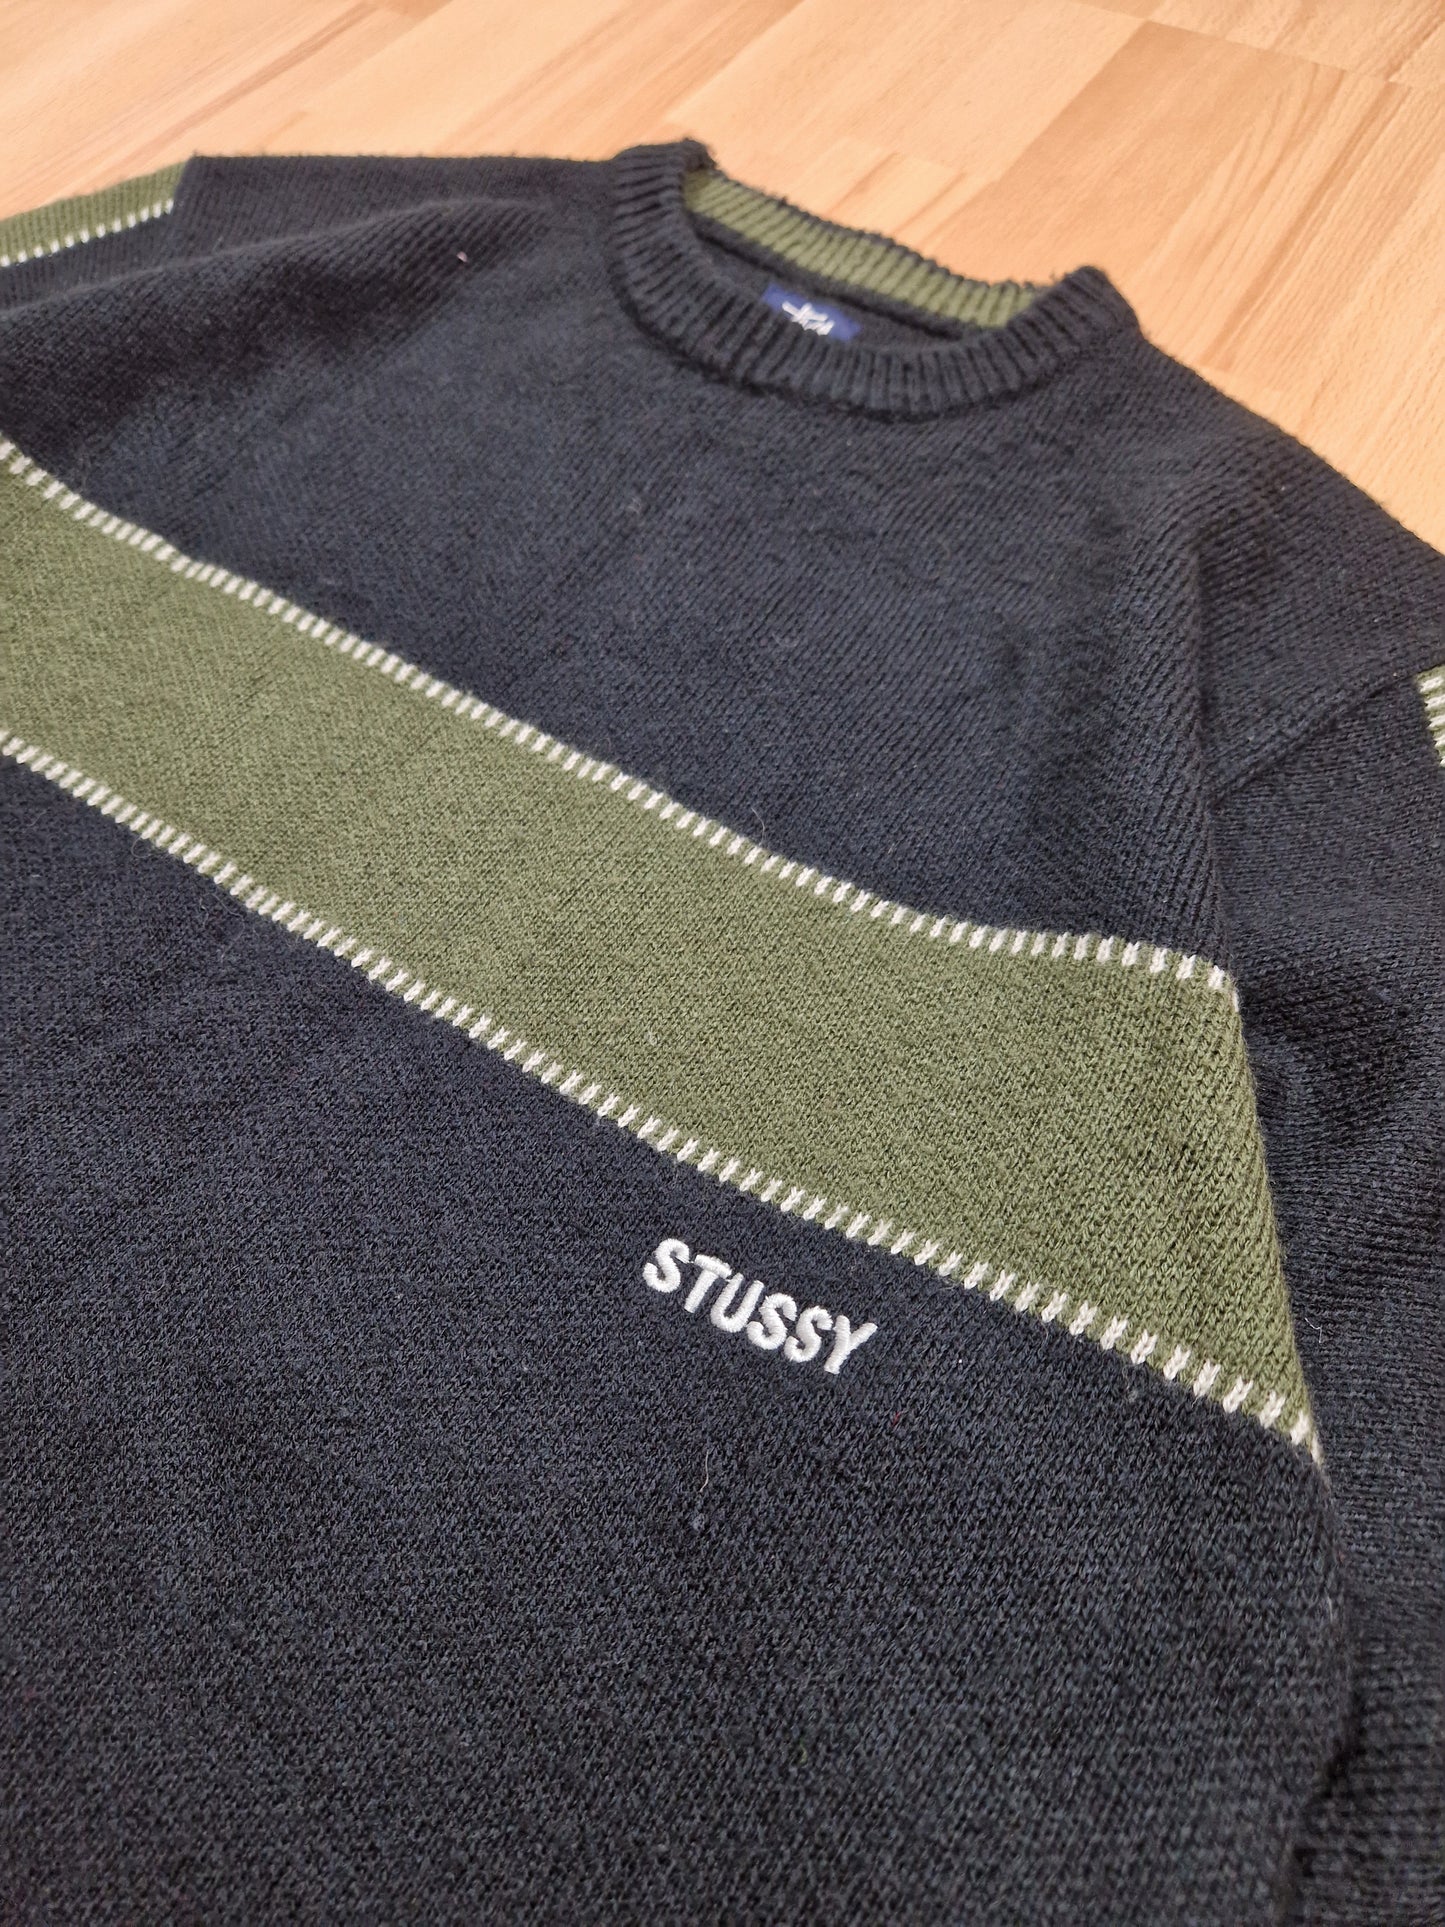 RARE Vintage Stussy Knit Sweater (M)